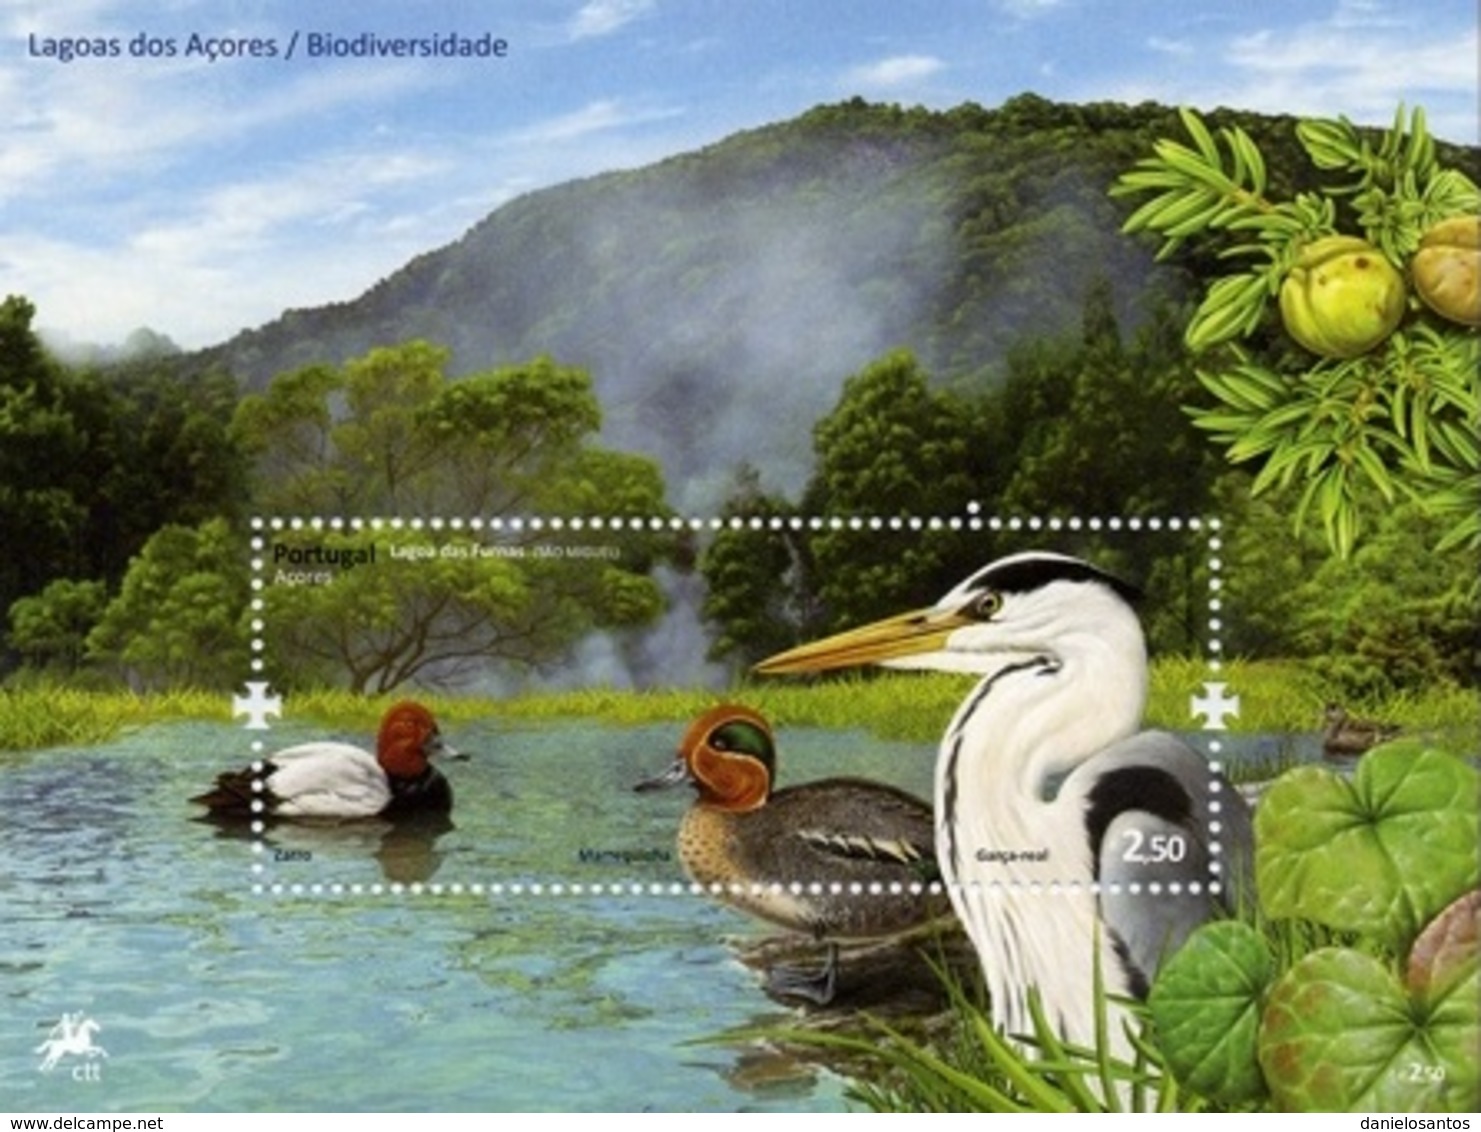 Portugal  Azores Açores 2009 Biodiversity Of Lakes And Lagoons Zarro, Marrequinha, Garça-real - Souvenir Sheet MNH - Ducks